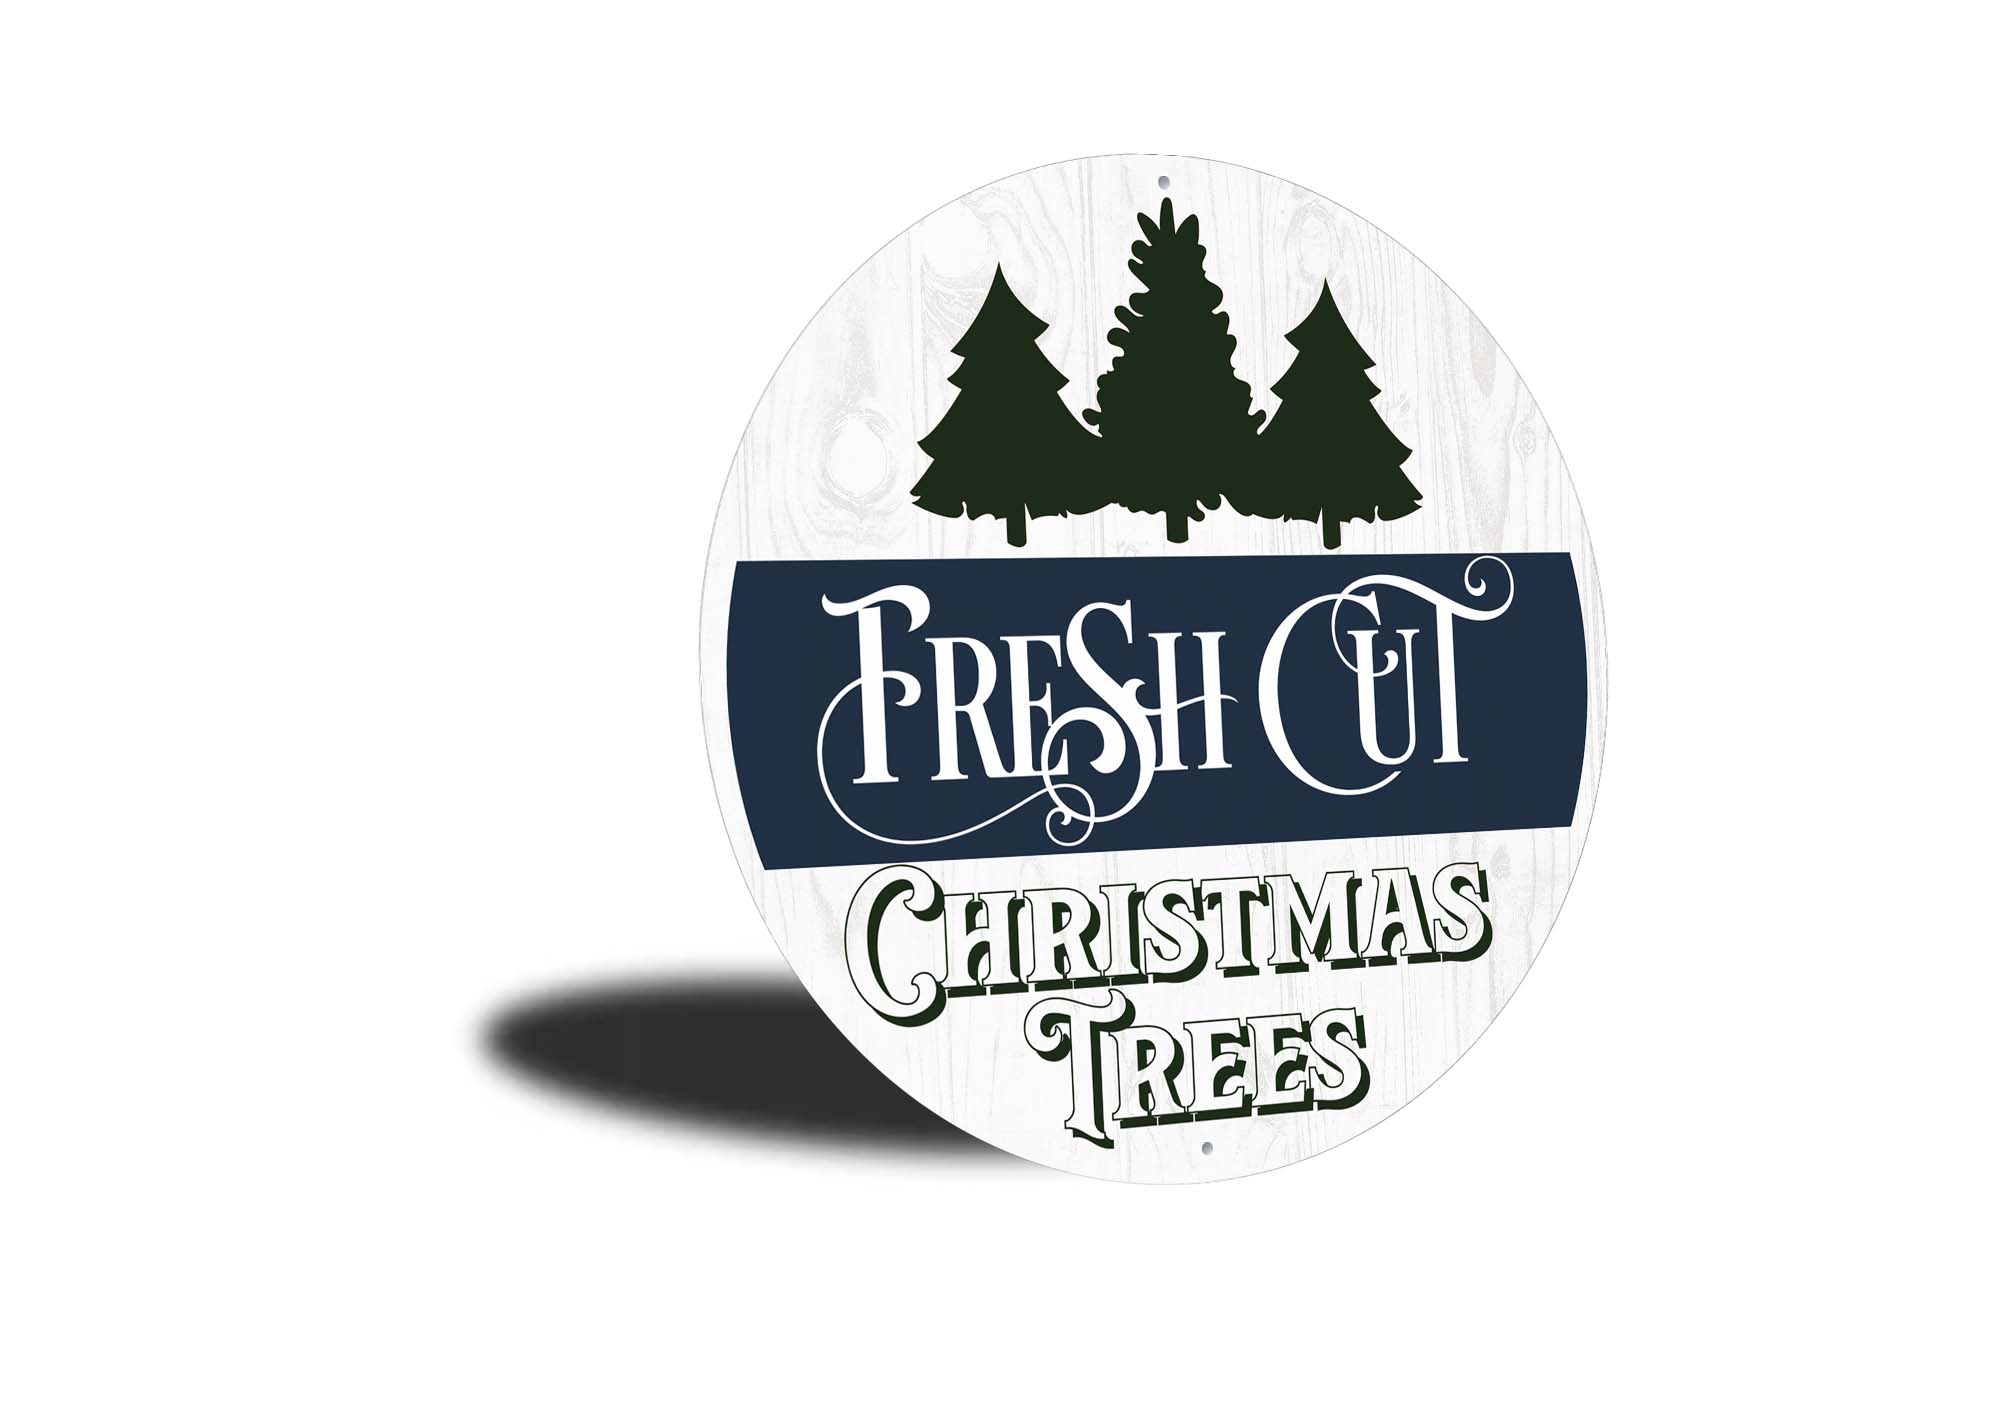 Fresh Cut Christmas Trees Round Sign